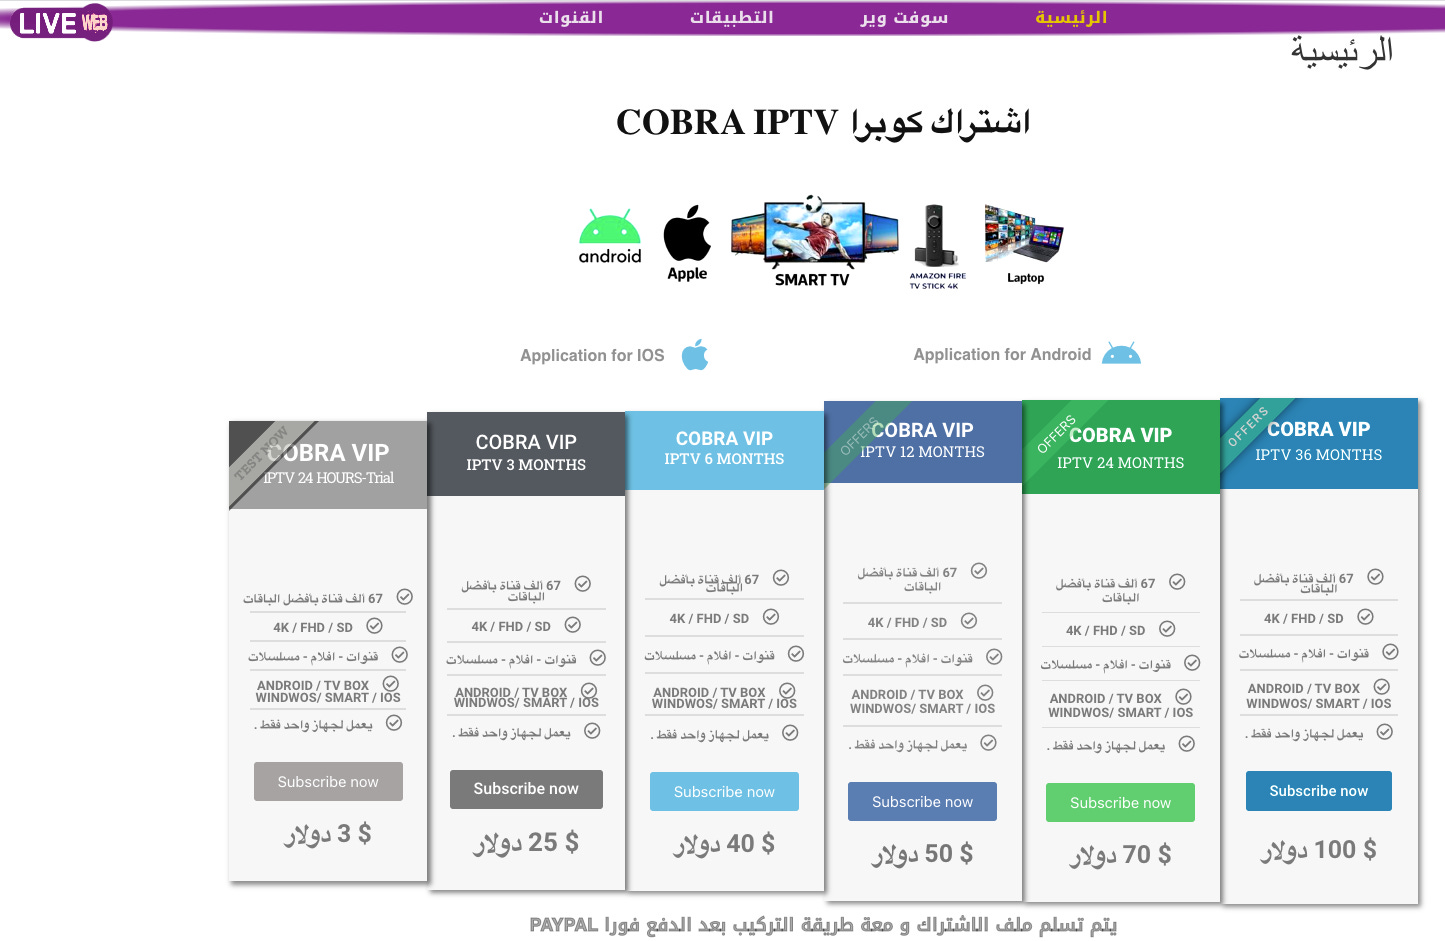 Cobra IPTV pricing page